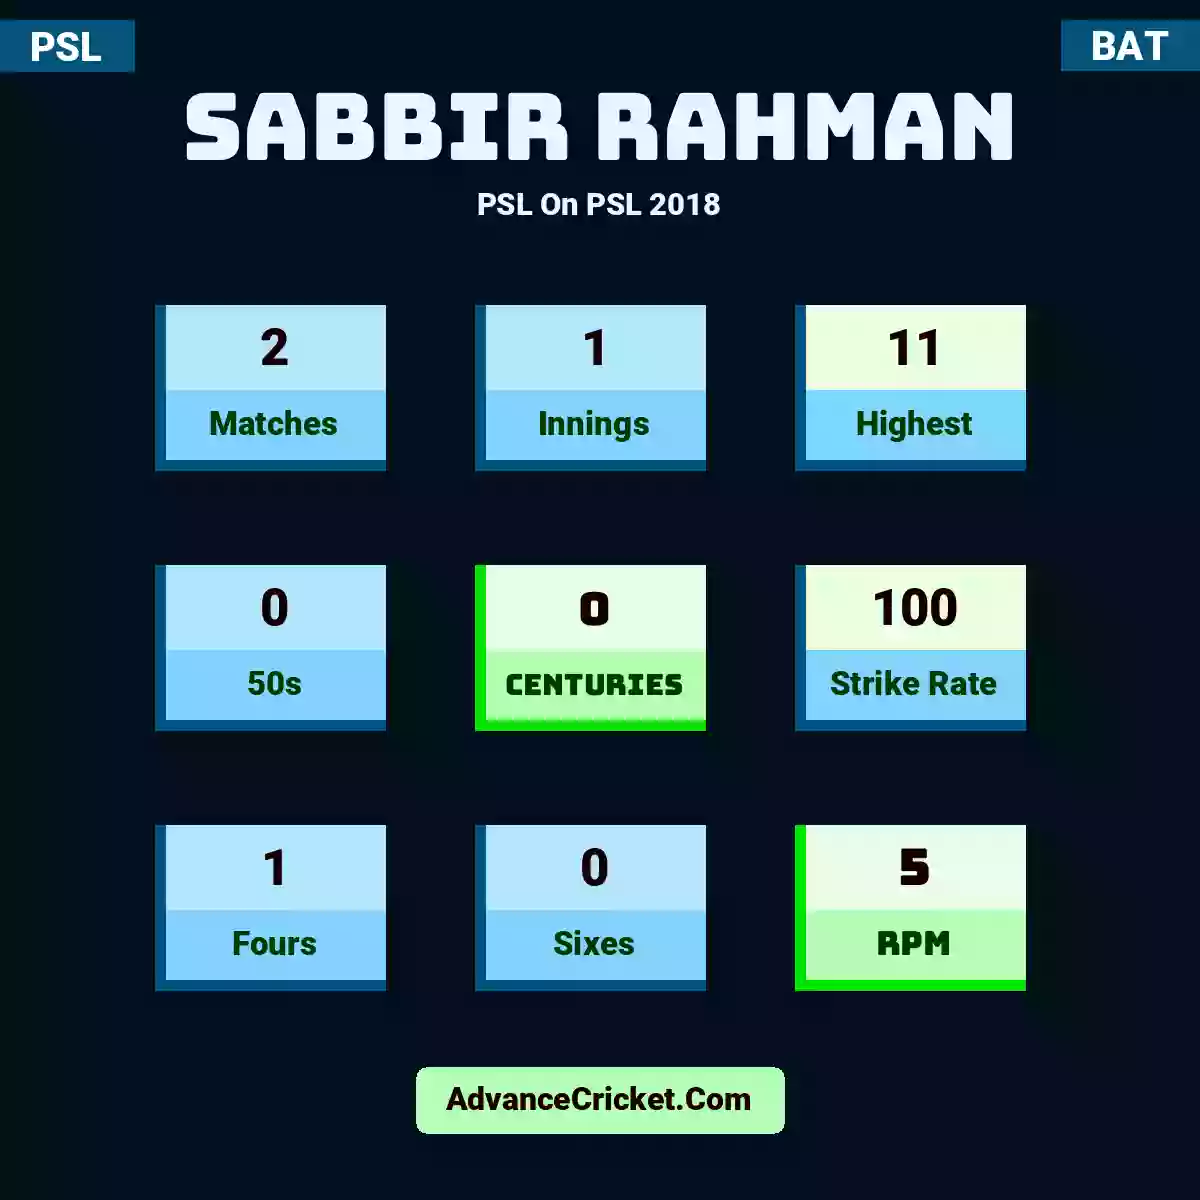 Sabbir Rahman PSL  On PSL 2018, Sabbir Rahman played 2 matches, scored 11 runs as highest, 0 half-centuries, and 0 centuries, with a strike rate of 100. S.Rahman hit 1 fours and 0 sixes, with an RPM of 5.